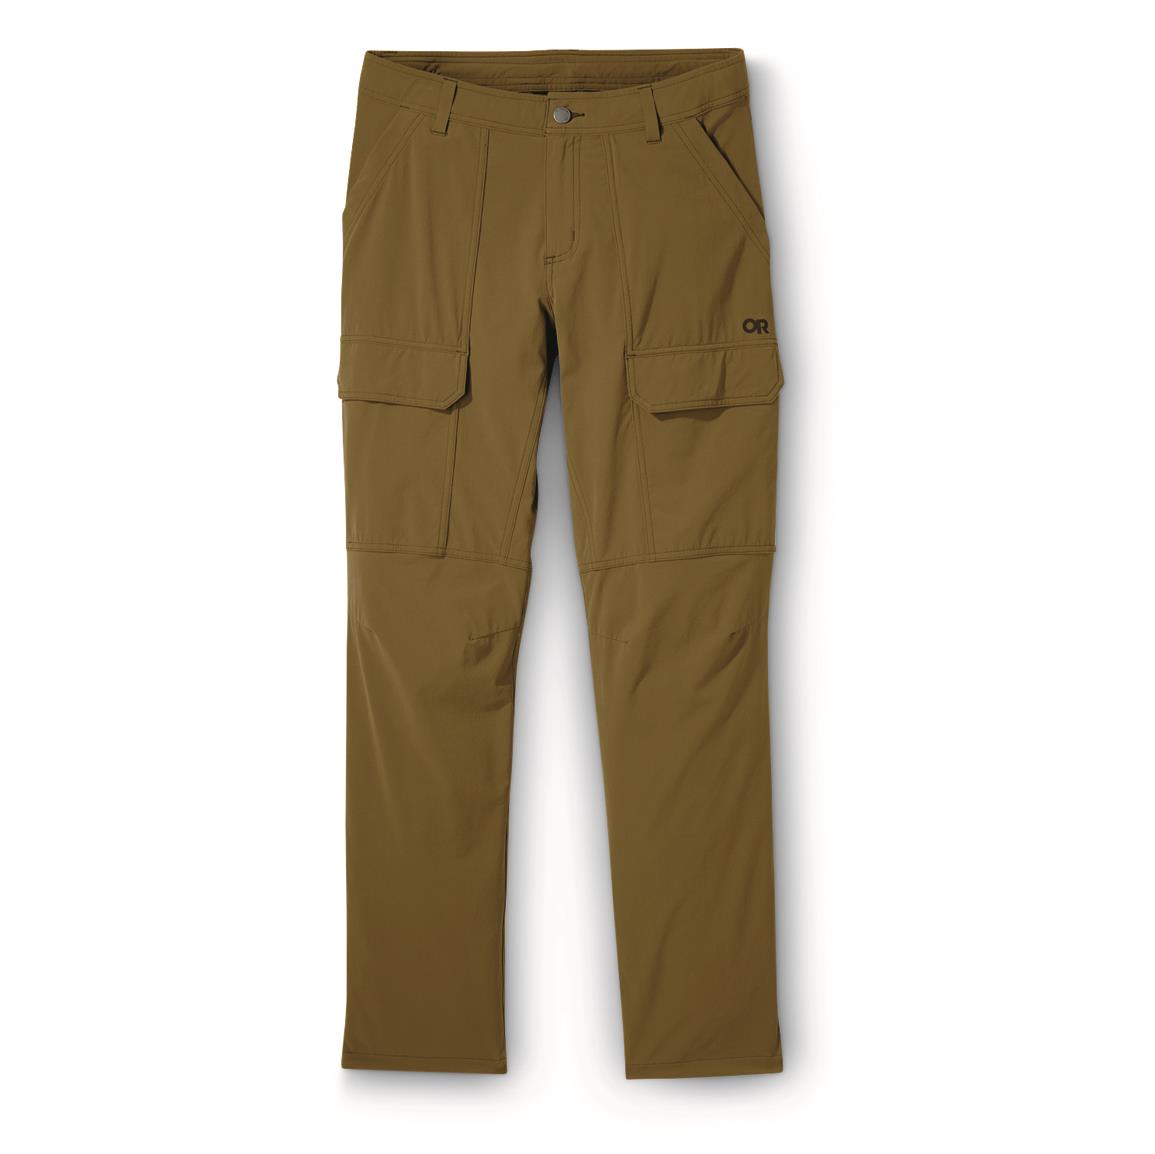 Guide Gear Men's Outdoor Cotton Cargo Pants - 677832, Jeans